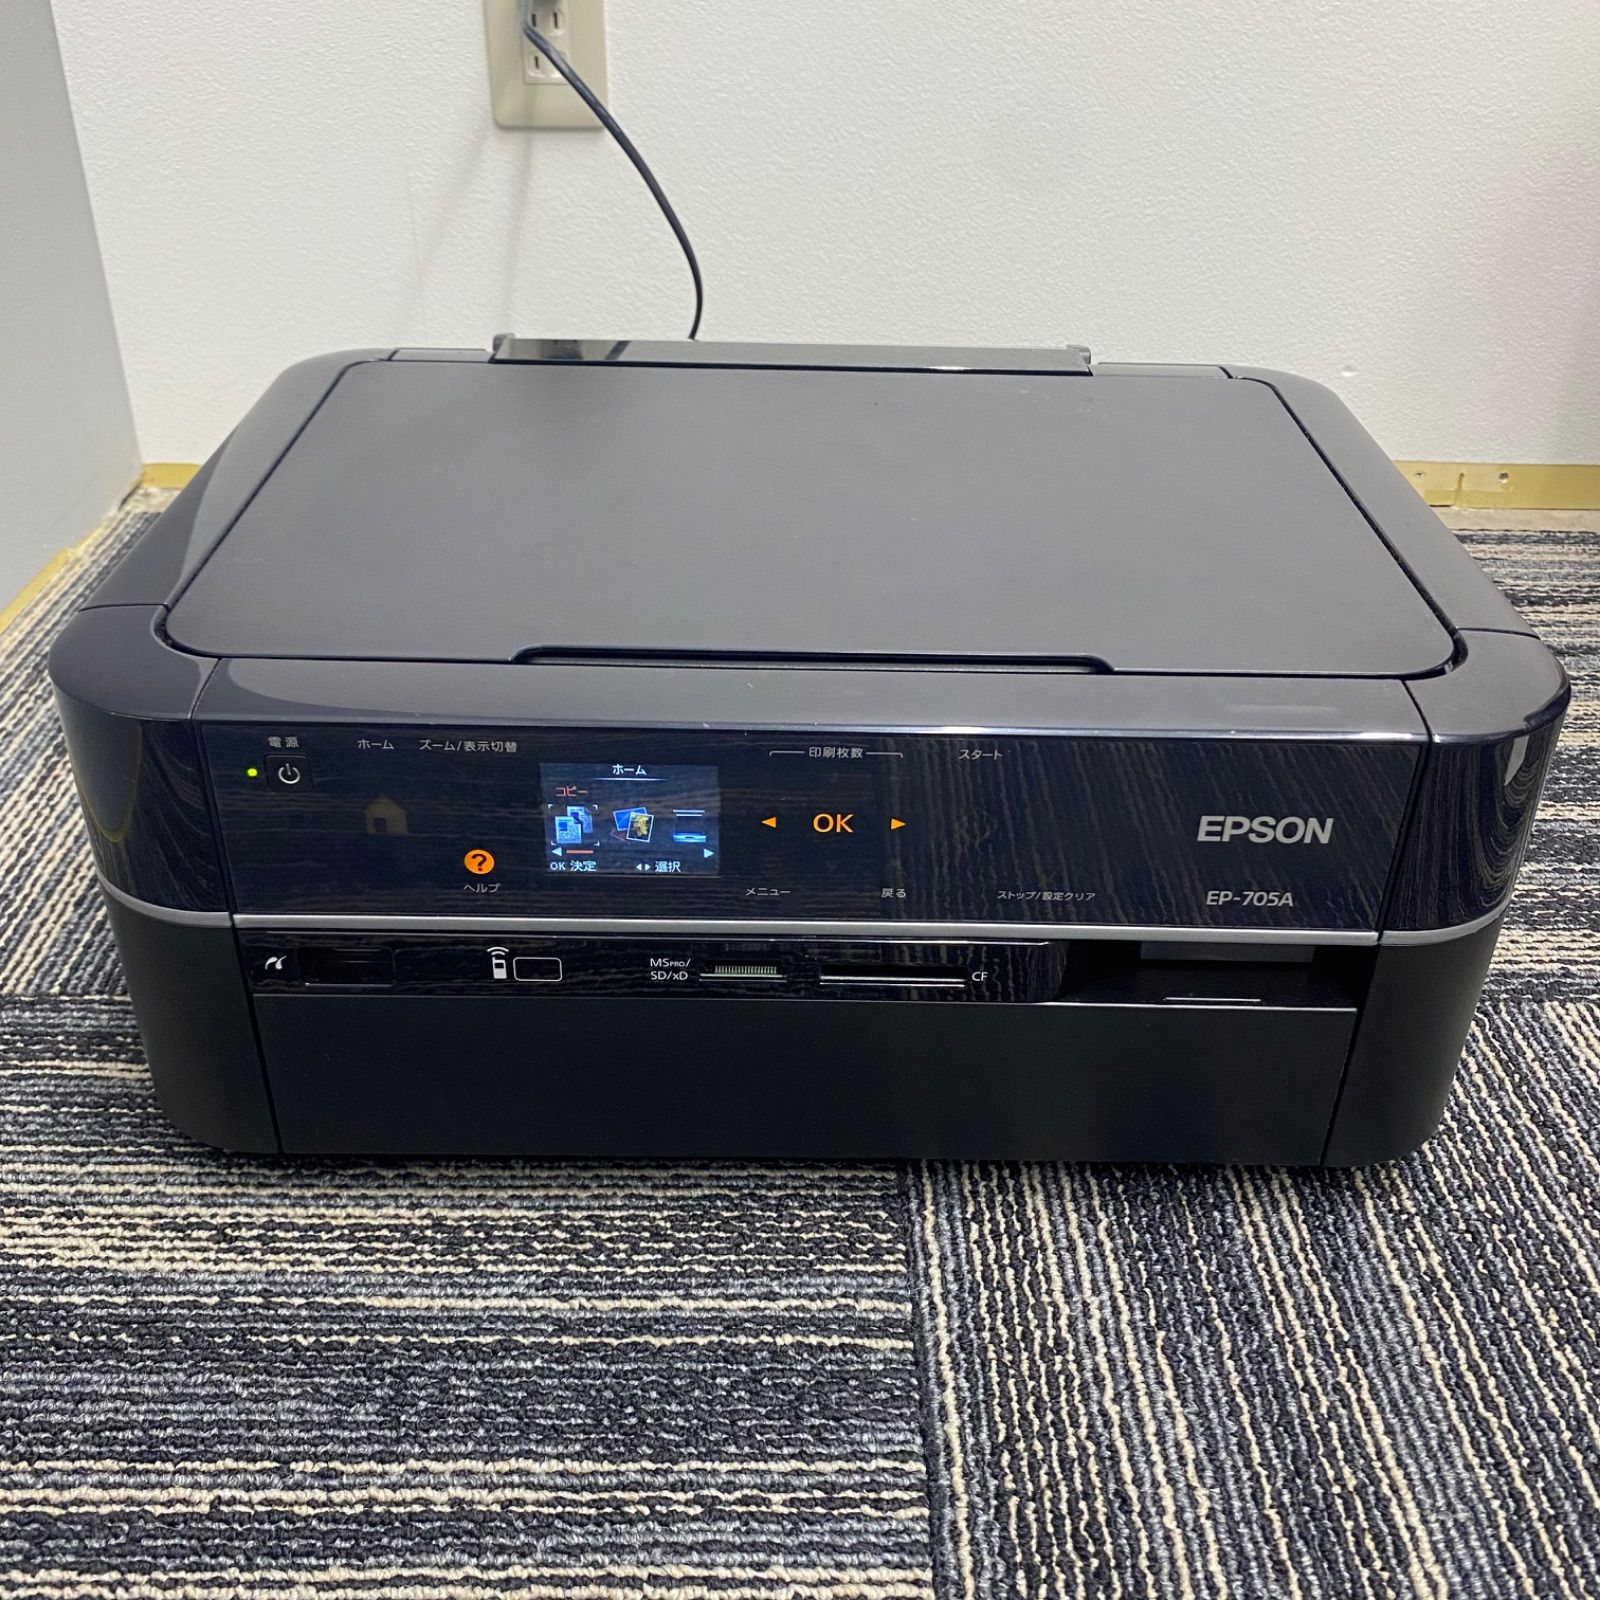 EPSON複合プリンター EP-705A - PC周辺機器